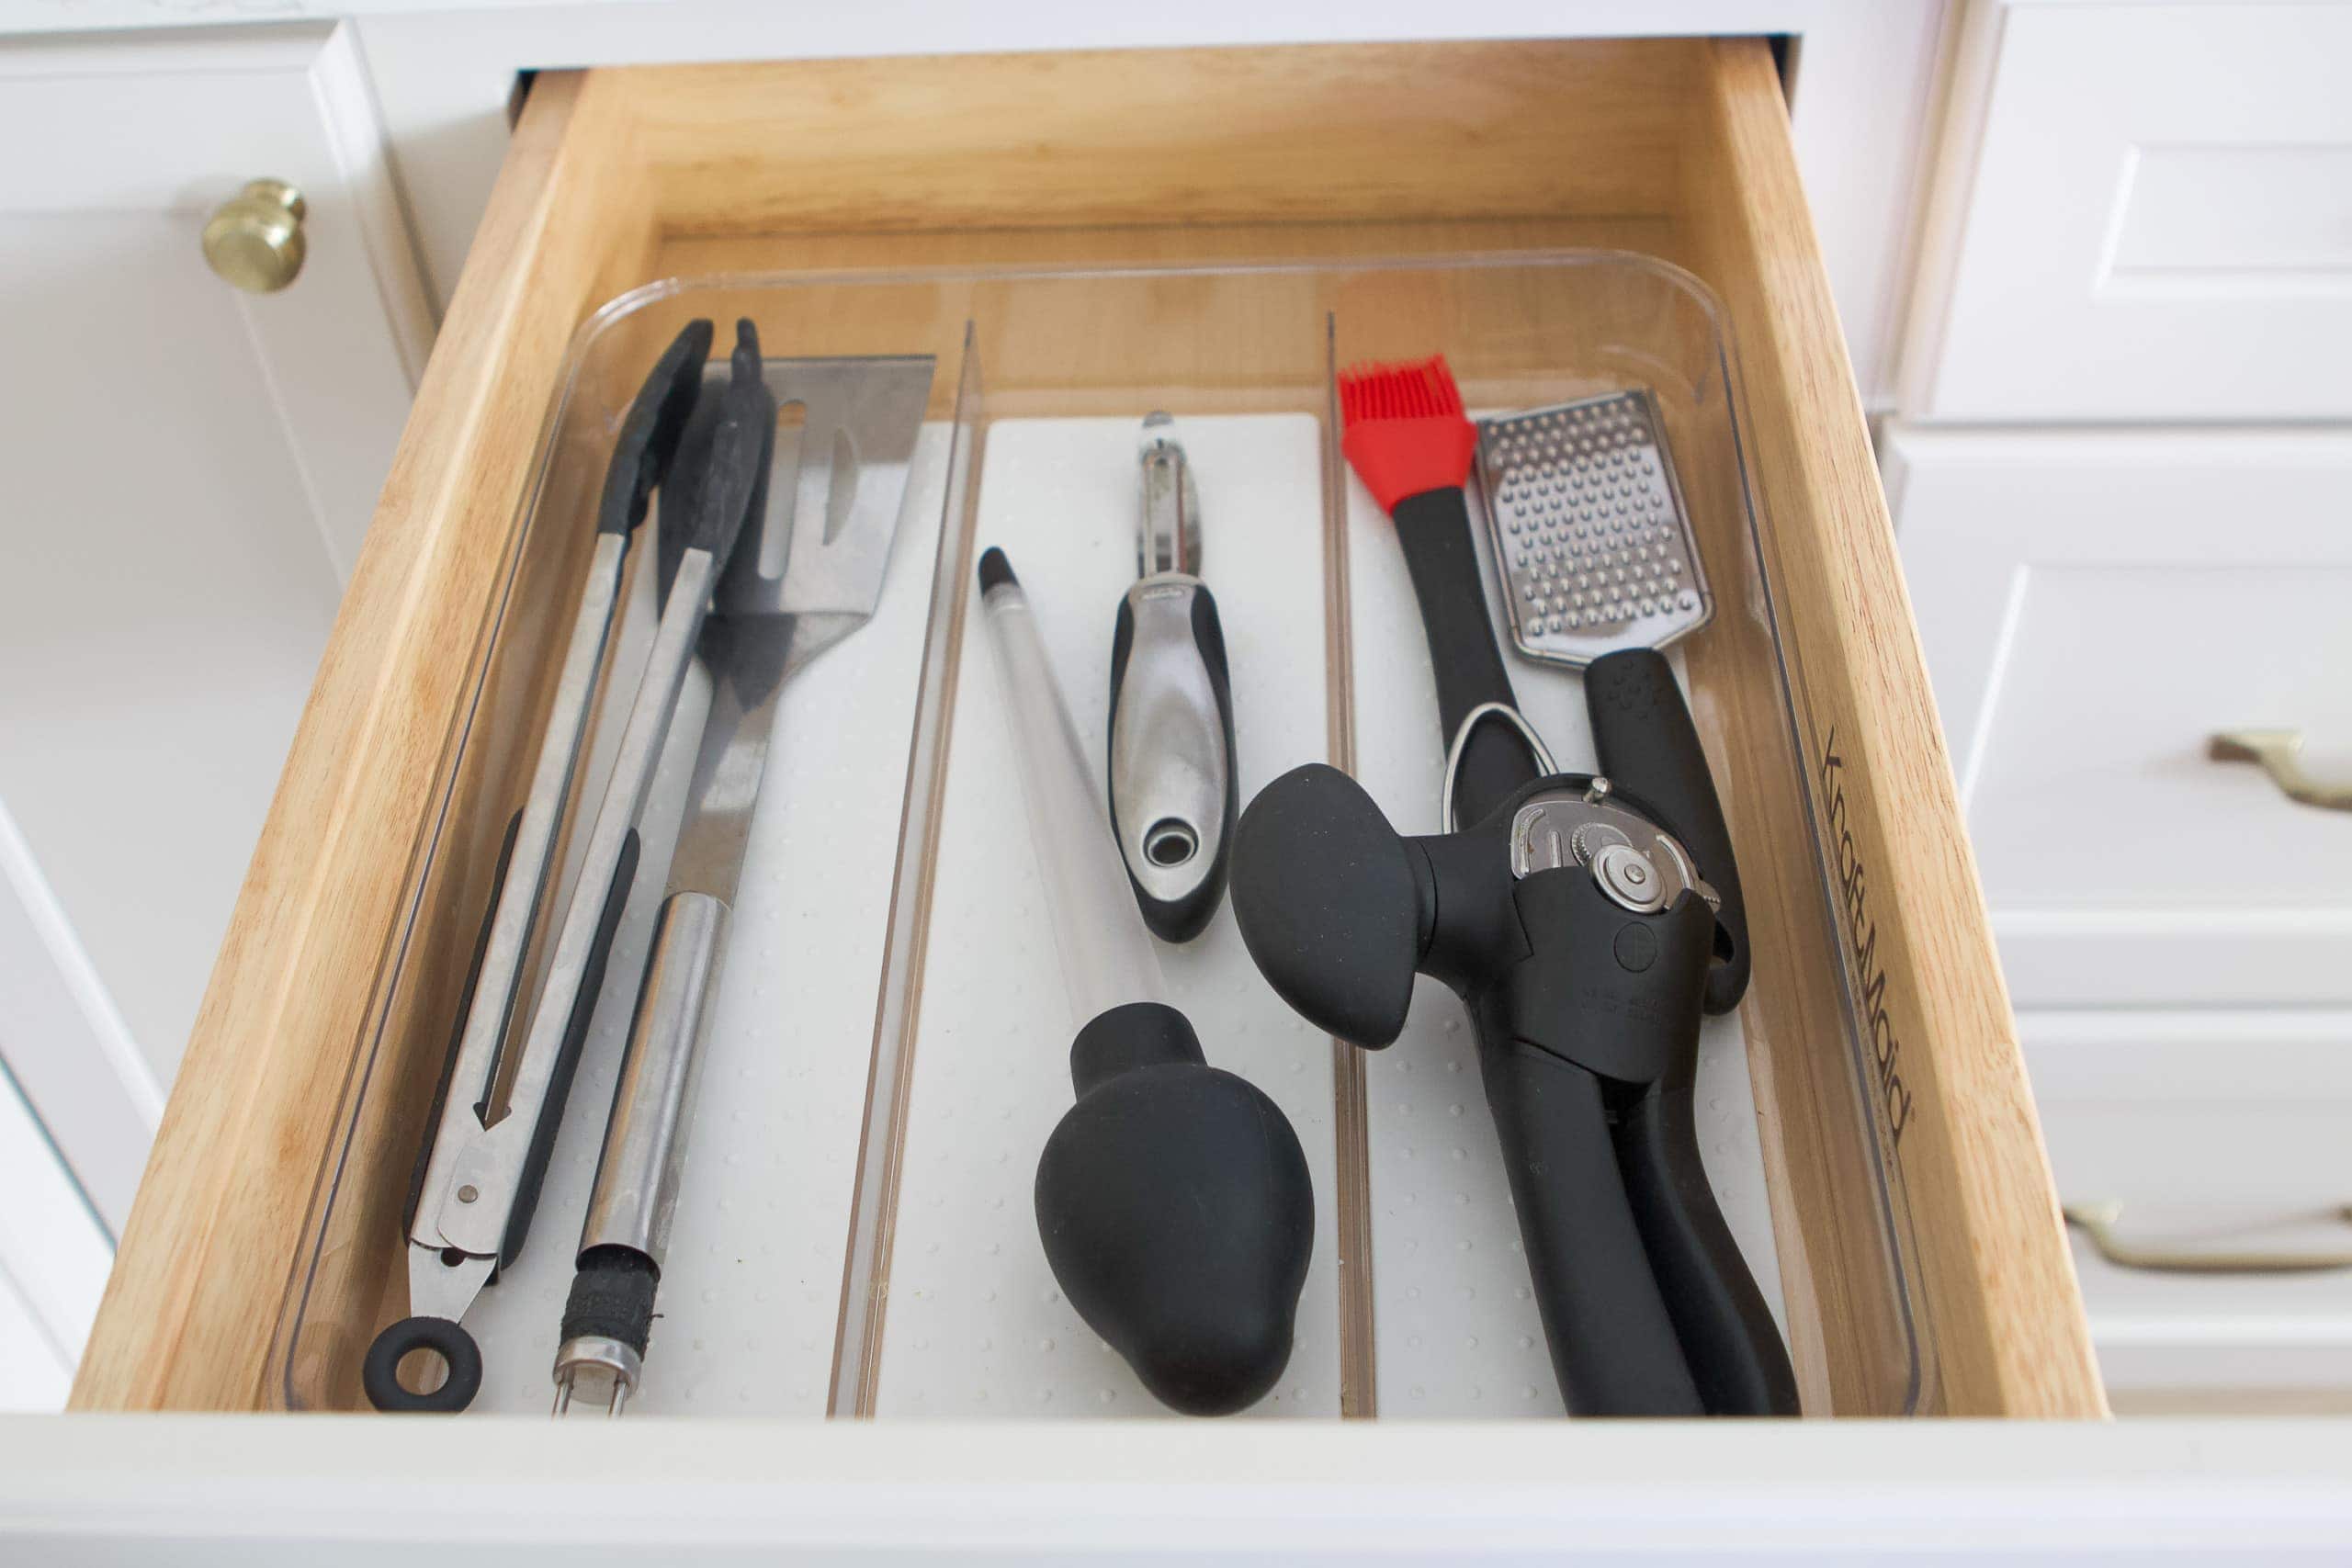 Organizing random kitchen utensils